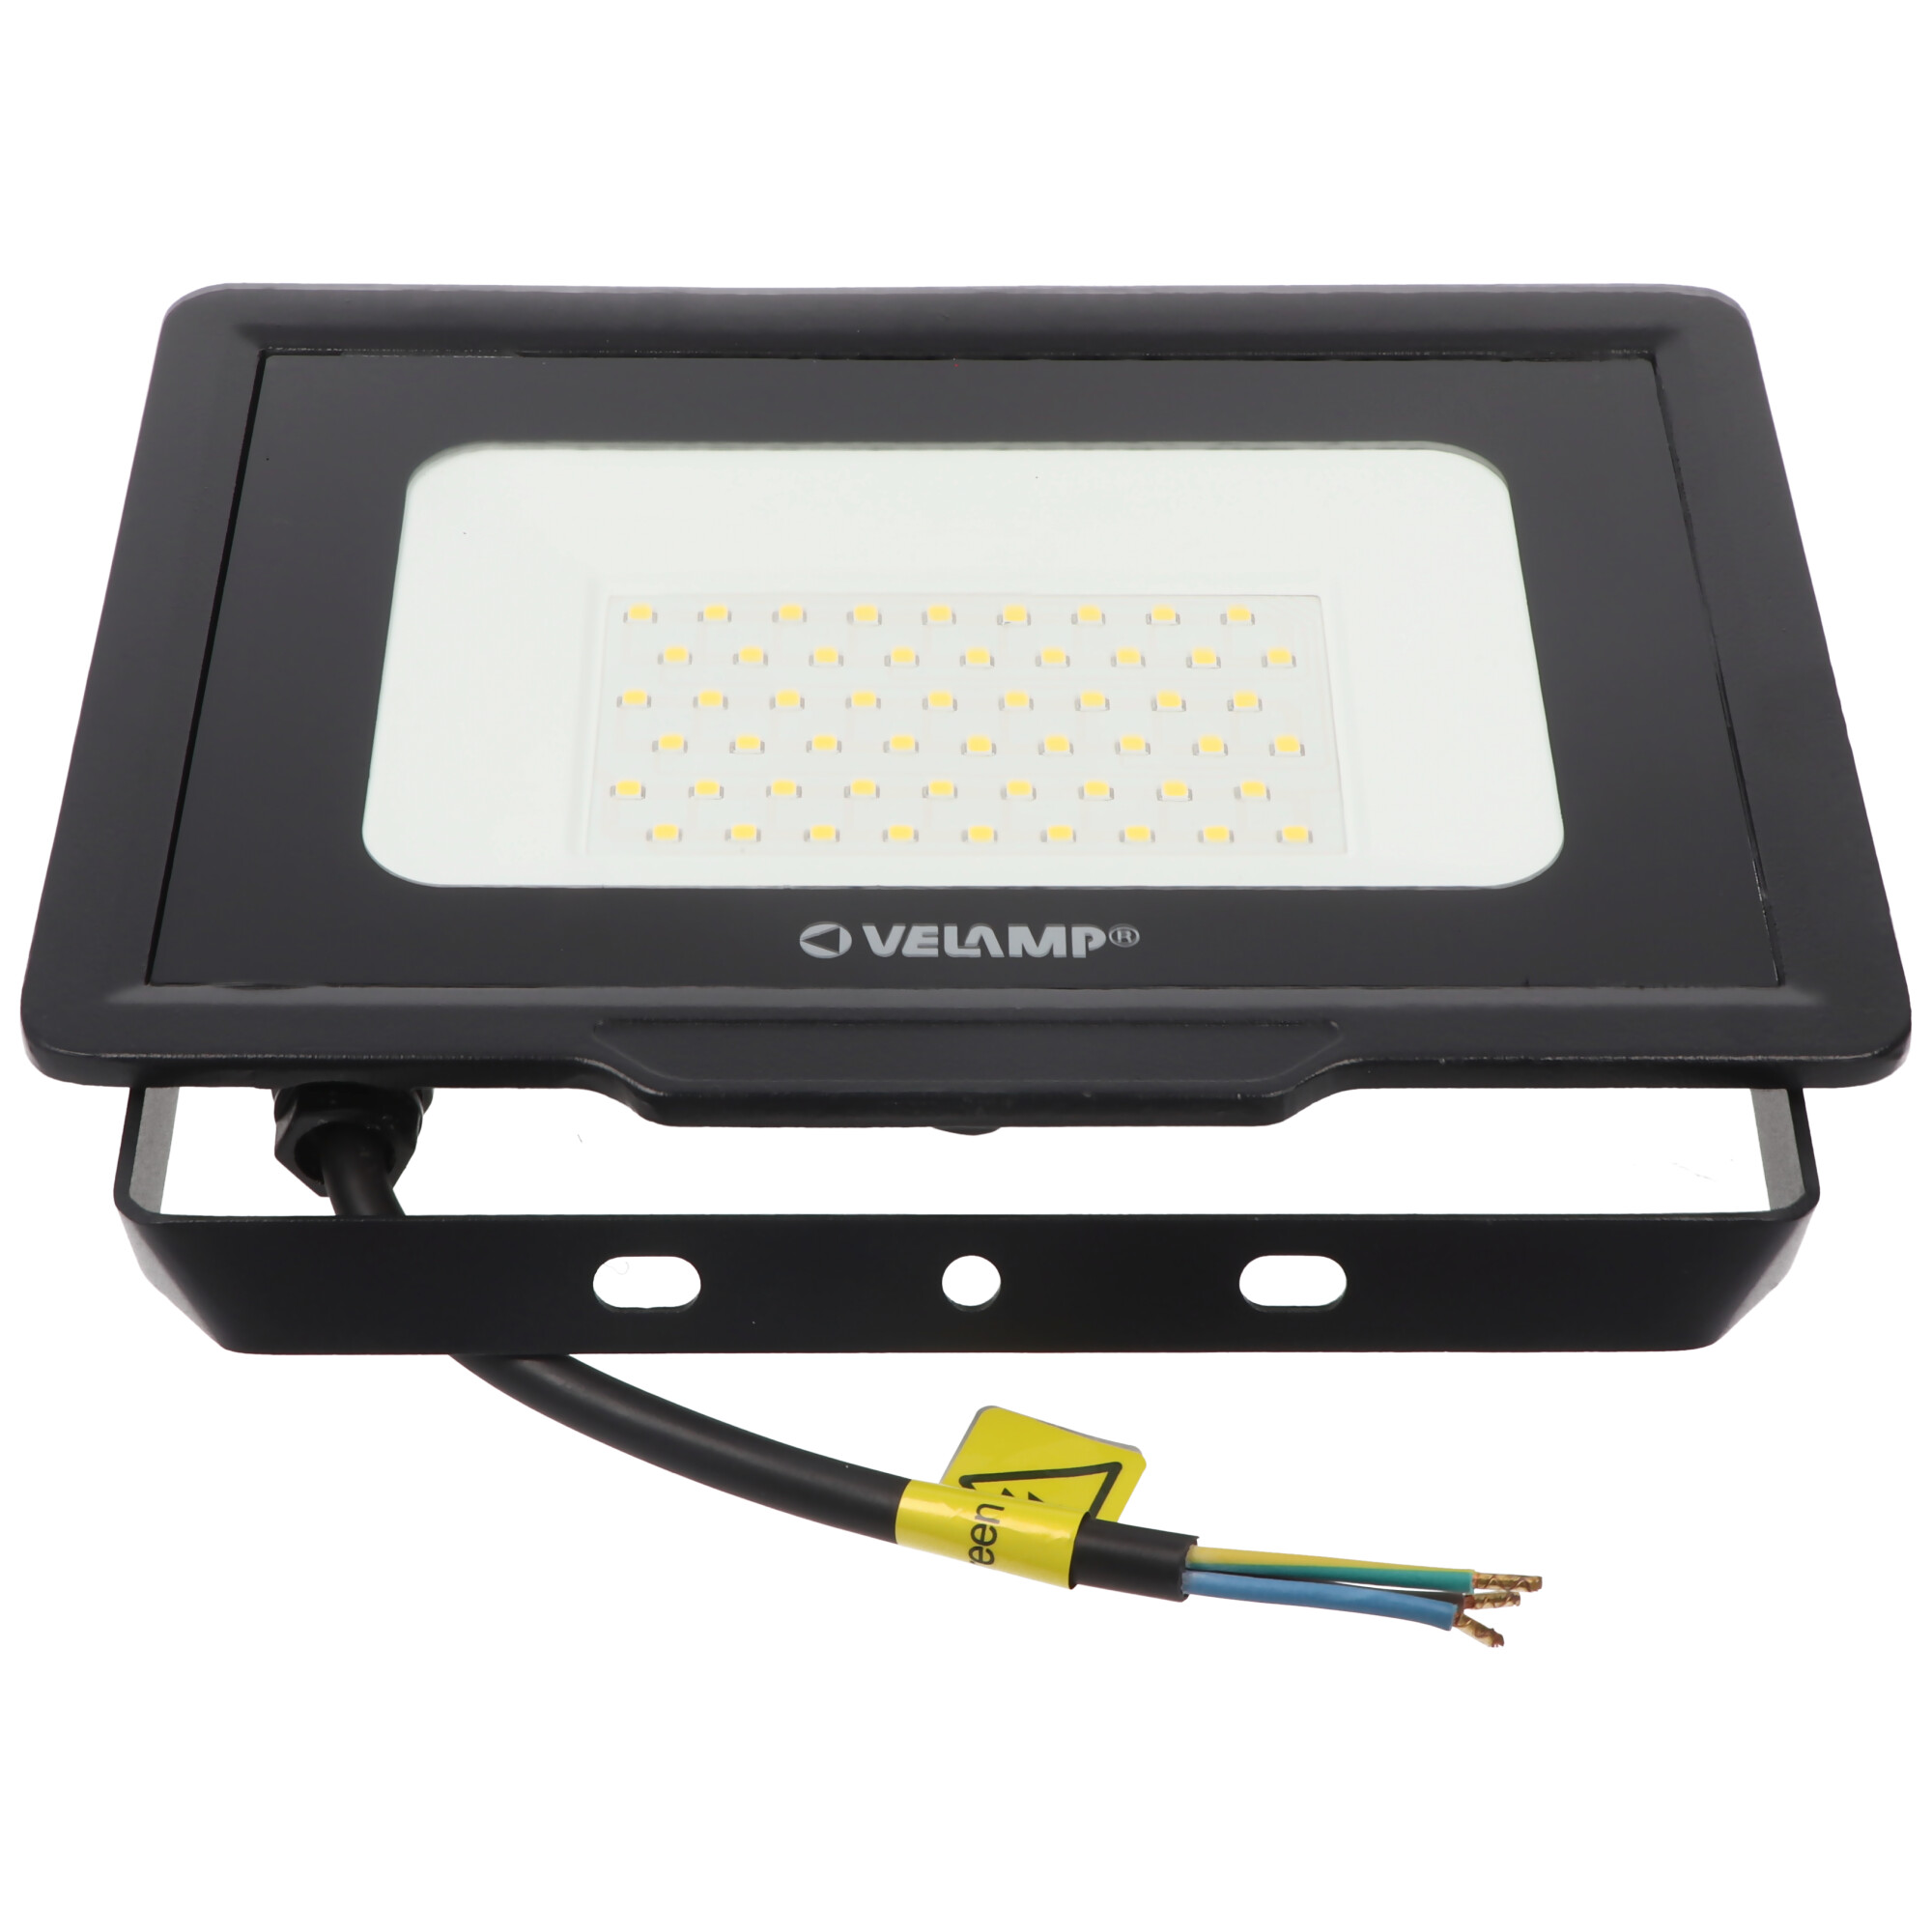 Velamp PADLIGHT5, SMD LED Strahler, 50W IP65, schwarz 4000K